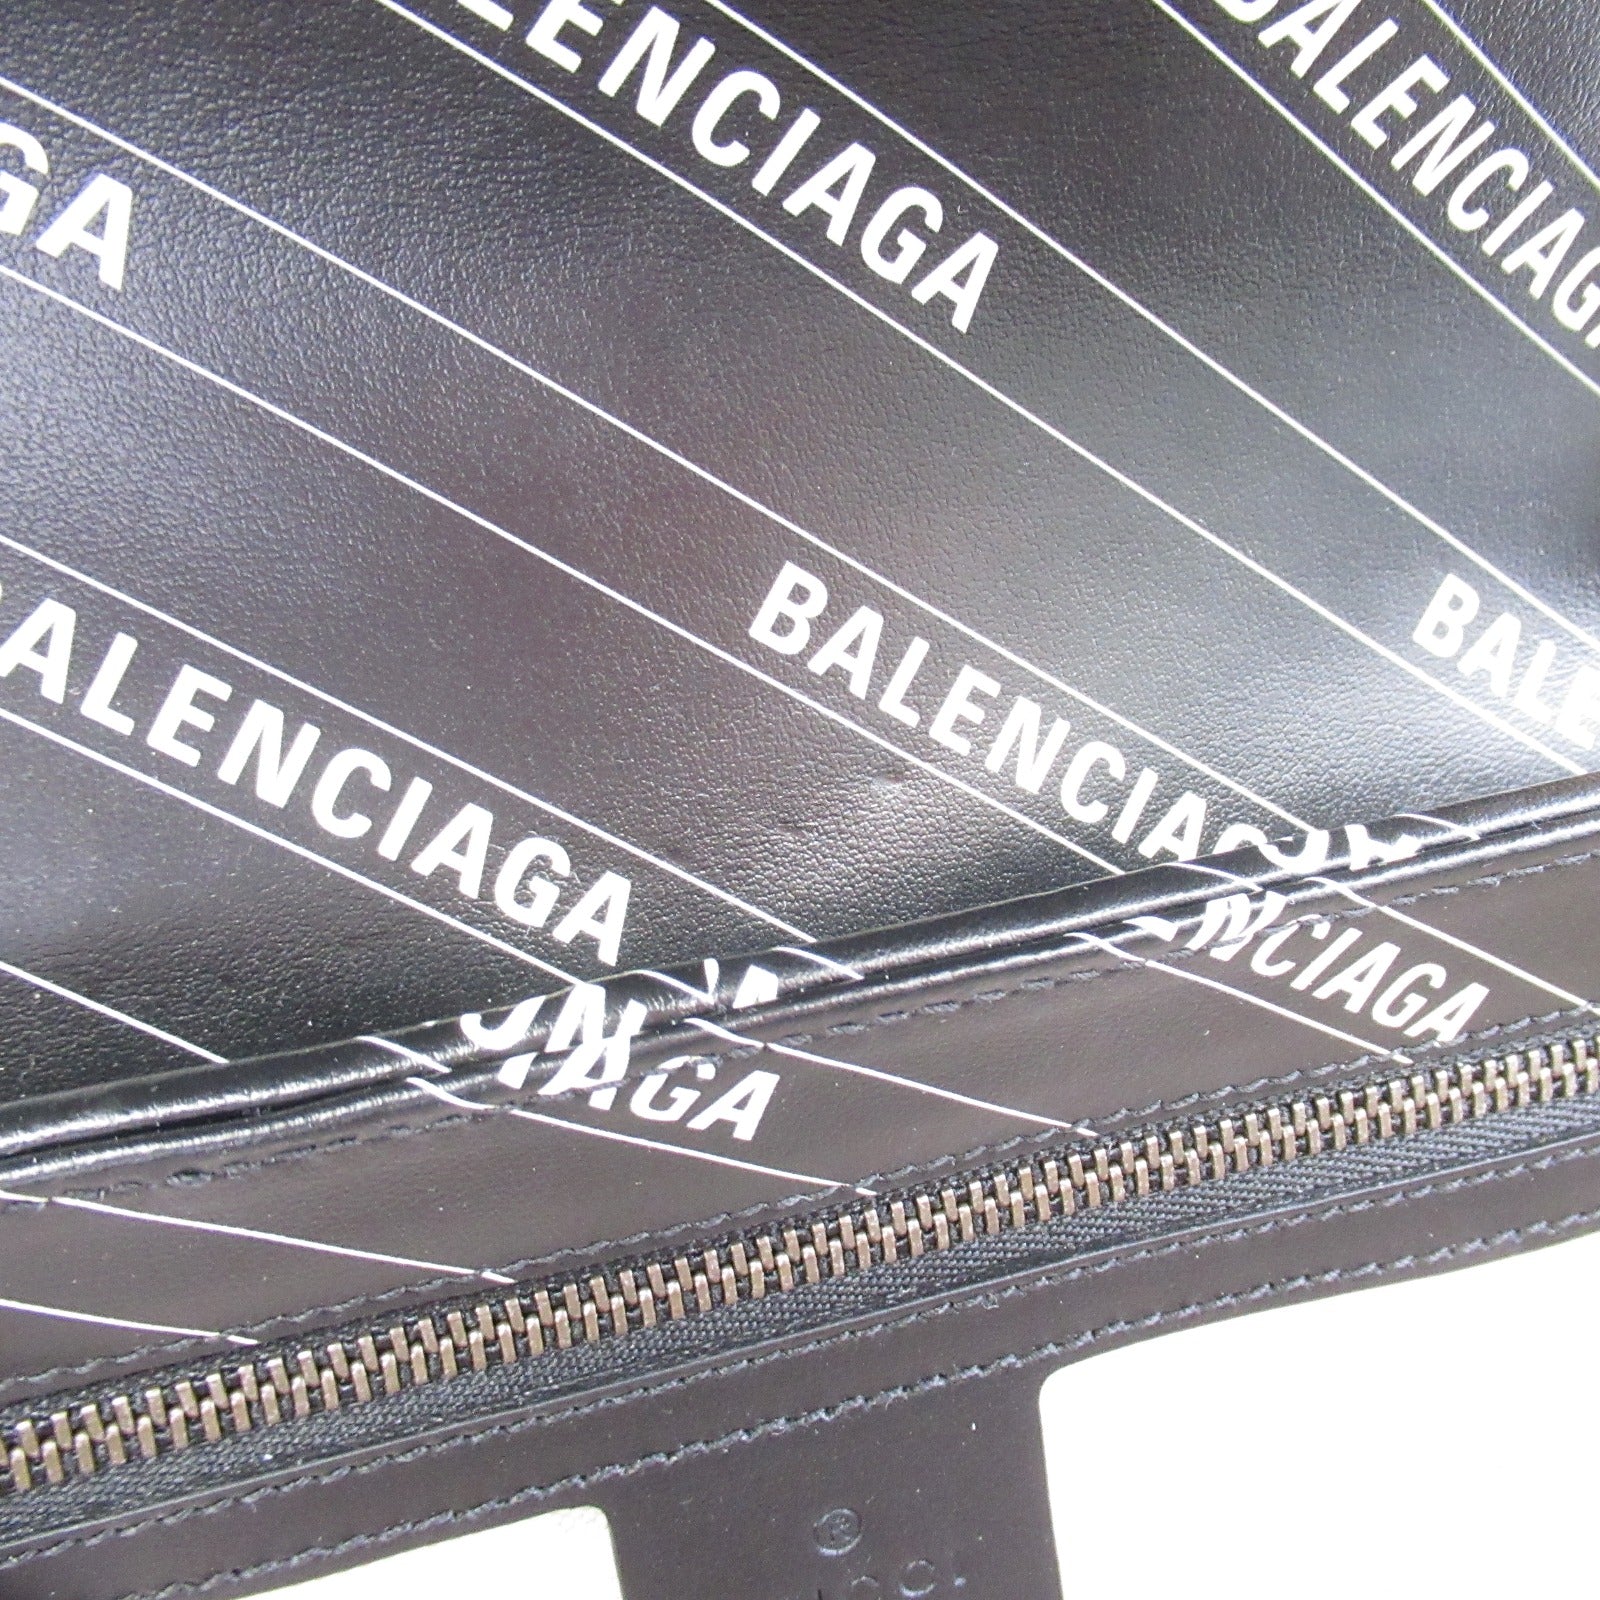 Gucci Gucci X BALENCIAGA Chain Shoulder Bag Leather  Black/White 443497